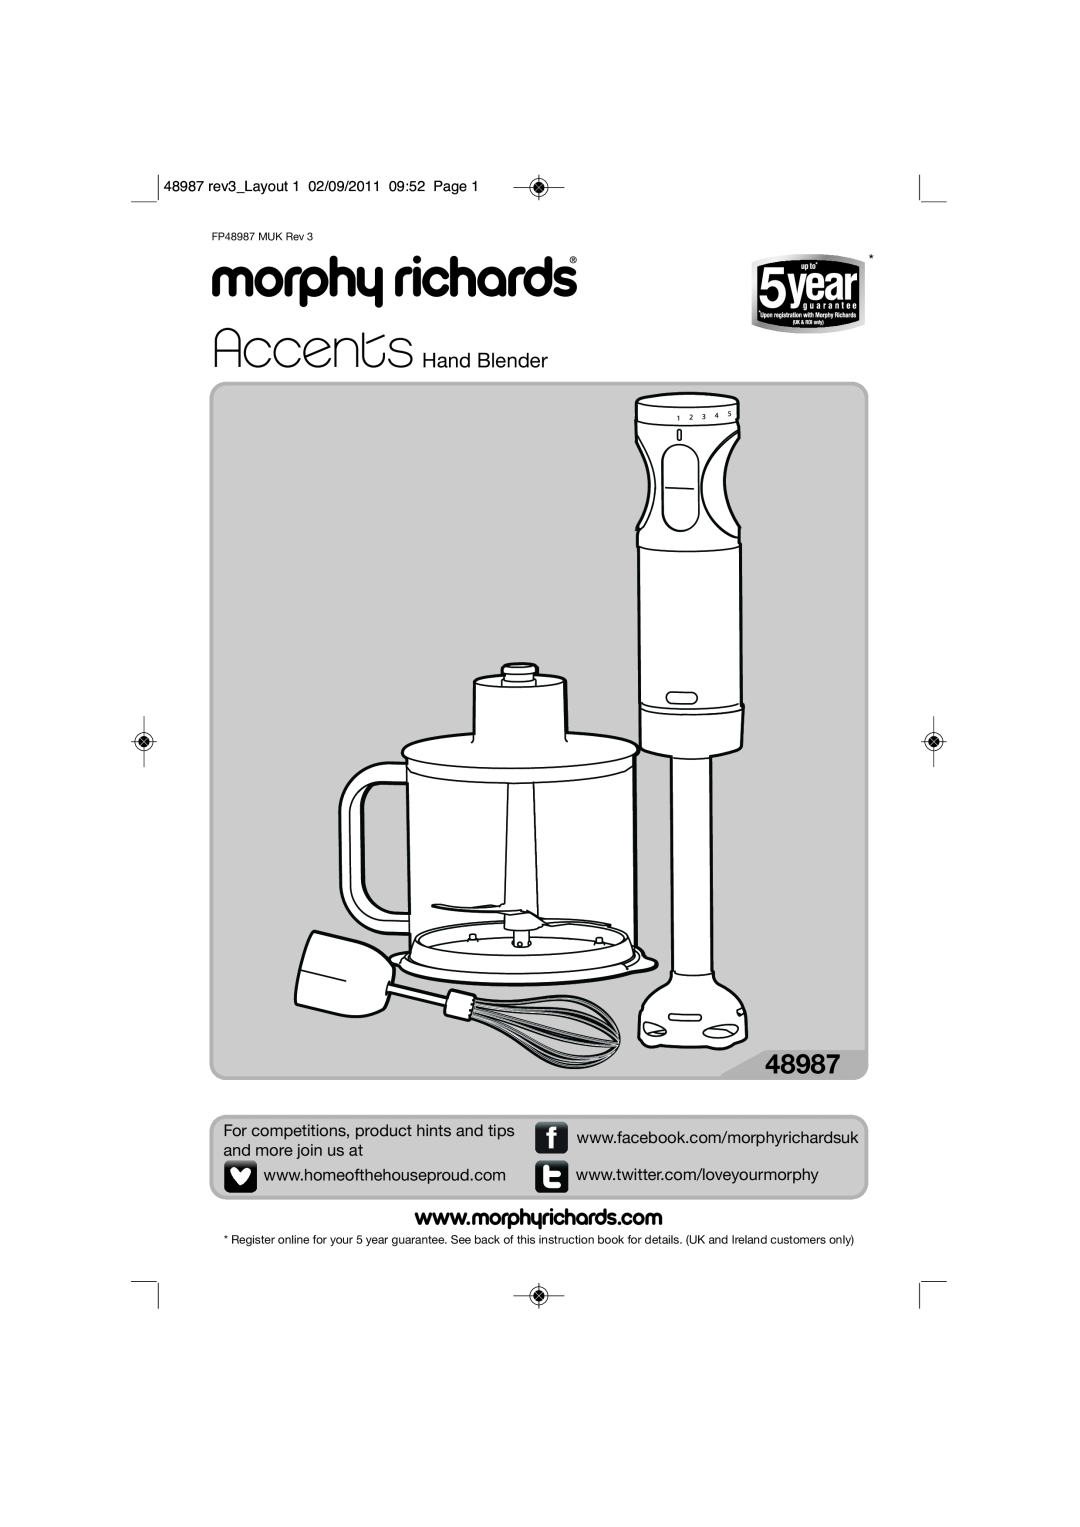 Morphy Richards 4897 manual 48987 rev3 Layout 1 02/09/2011 09 52 Page, Hand Blender 